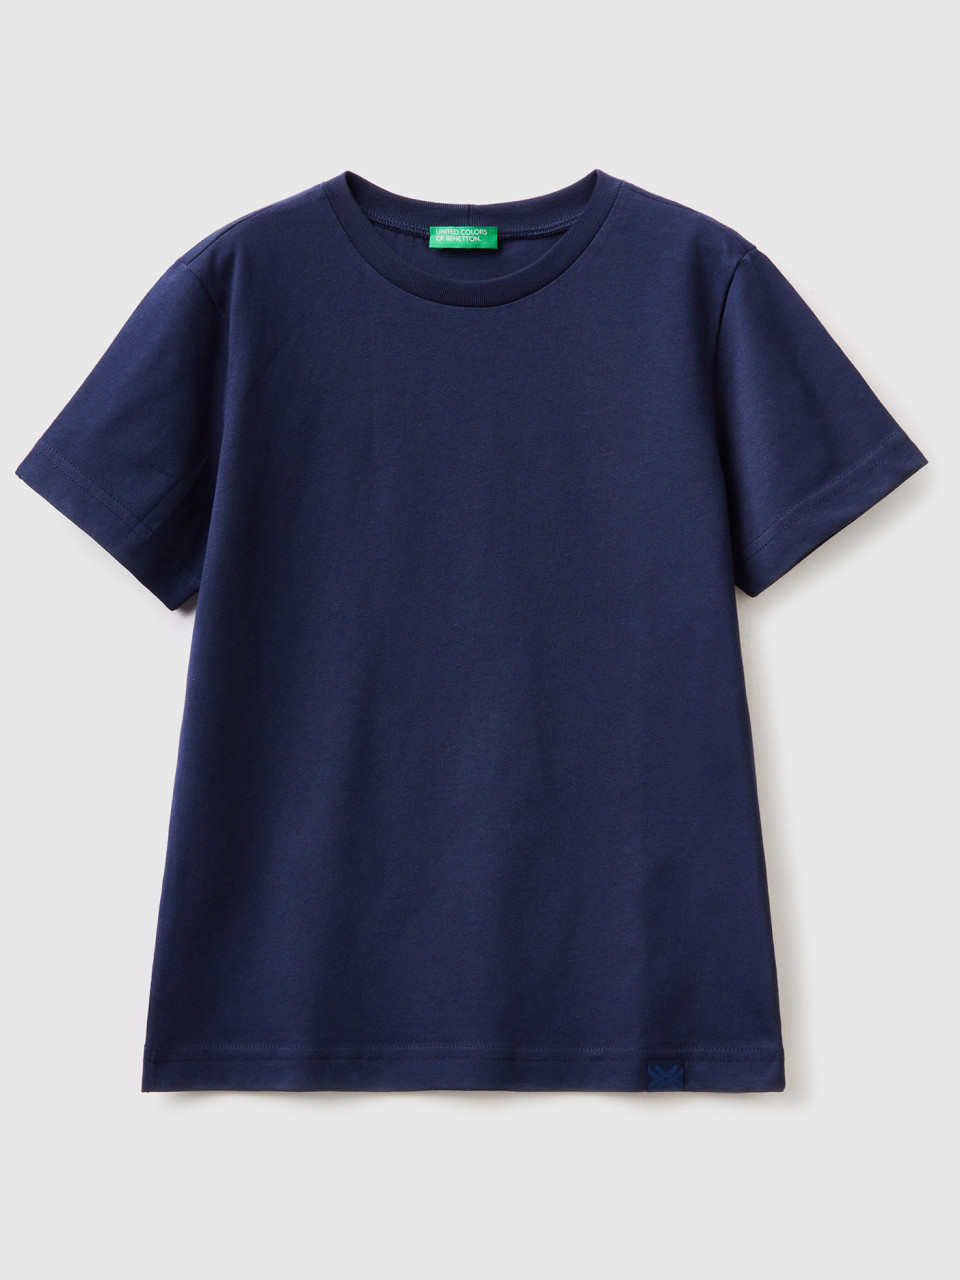 Benetton, Organic Cotton T-shirt, Dark Blue, Kids